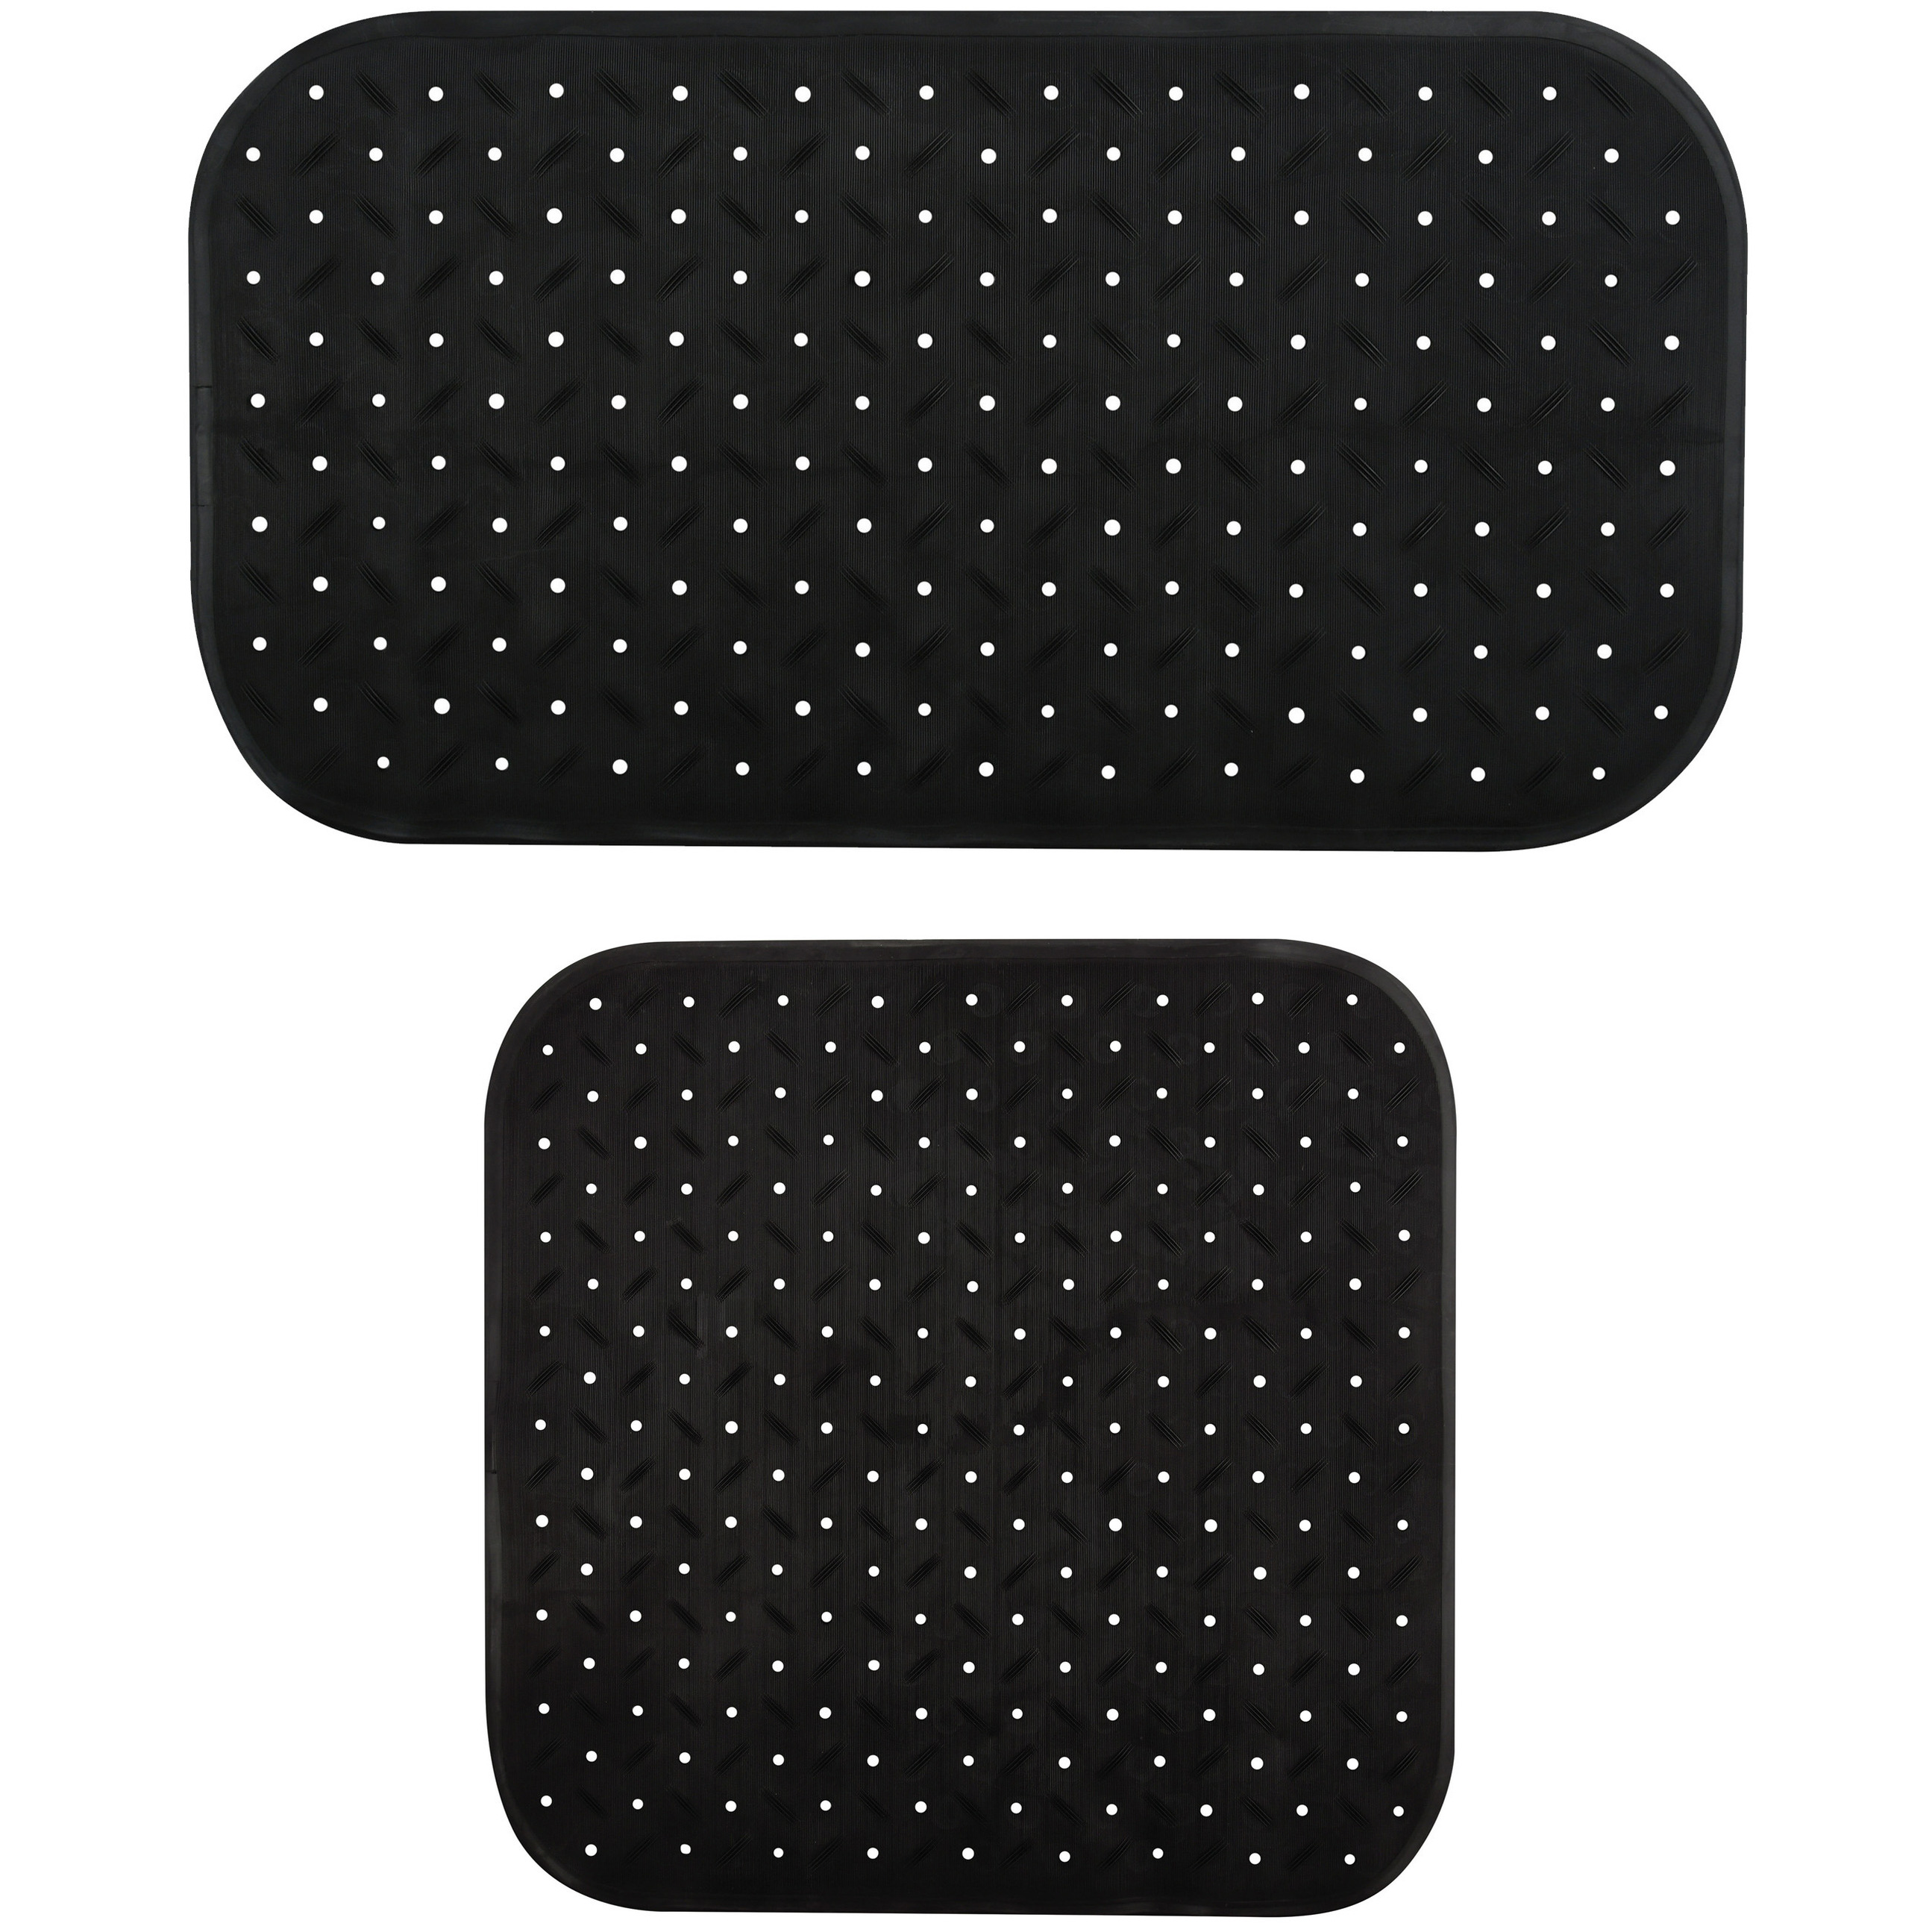 MSV Douche-bad anti-slip matten set badkamer rubber 2x stuks zwart 2 formaten